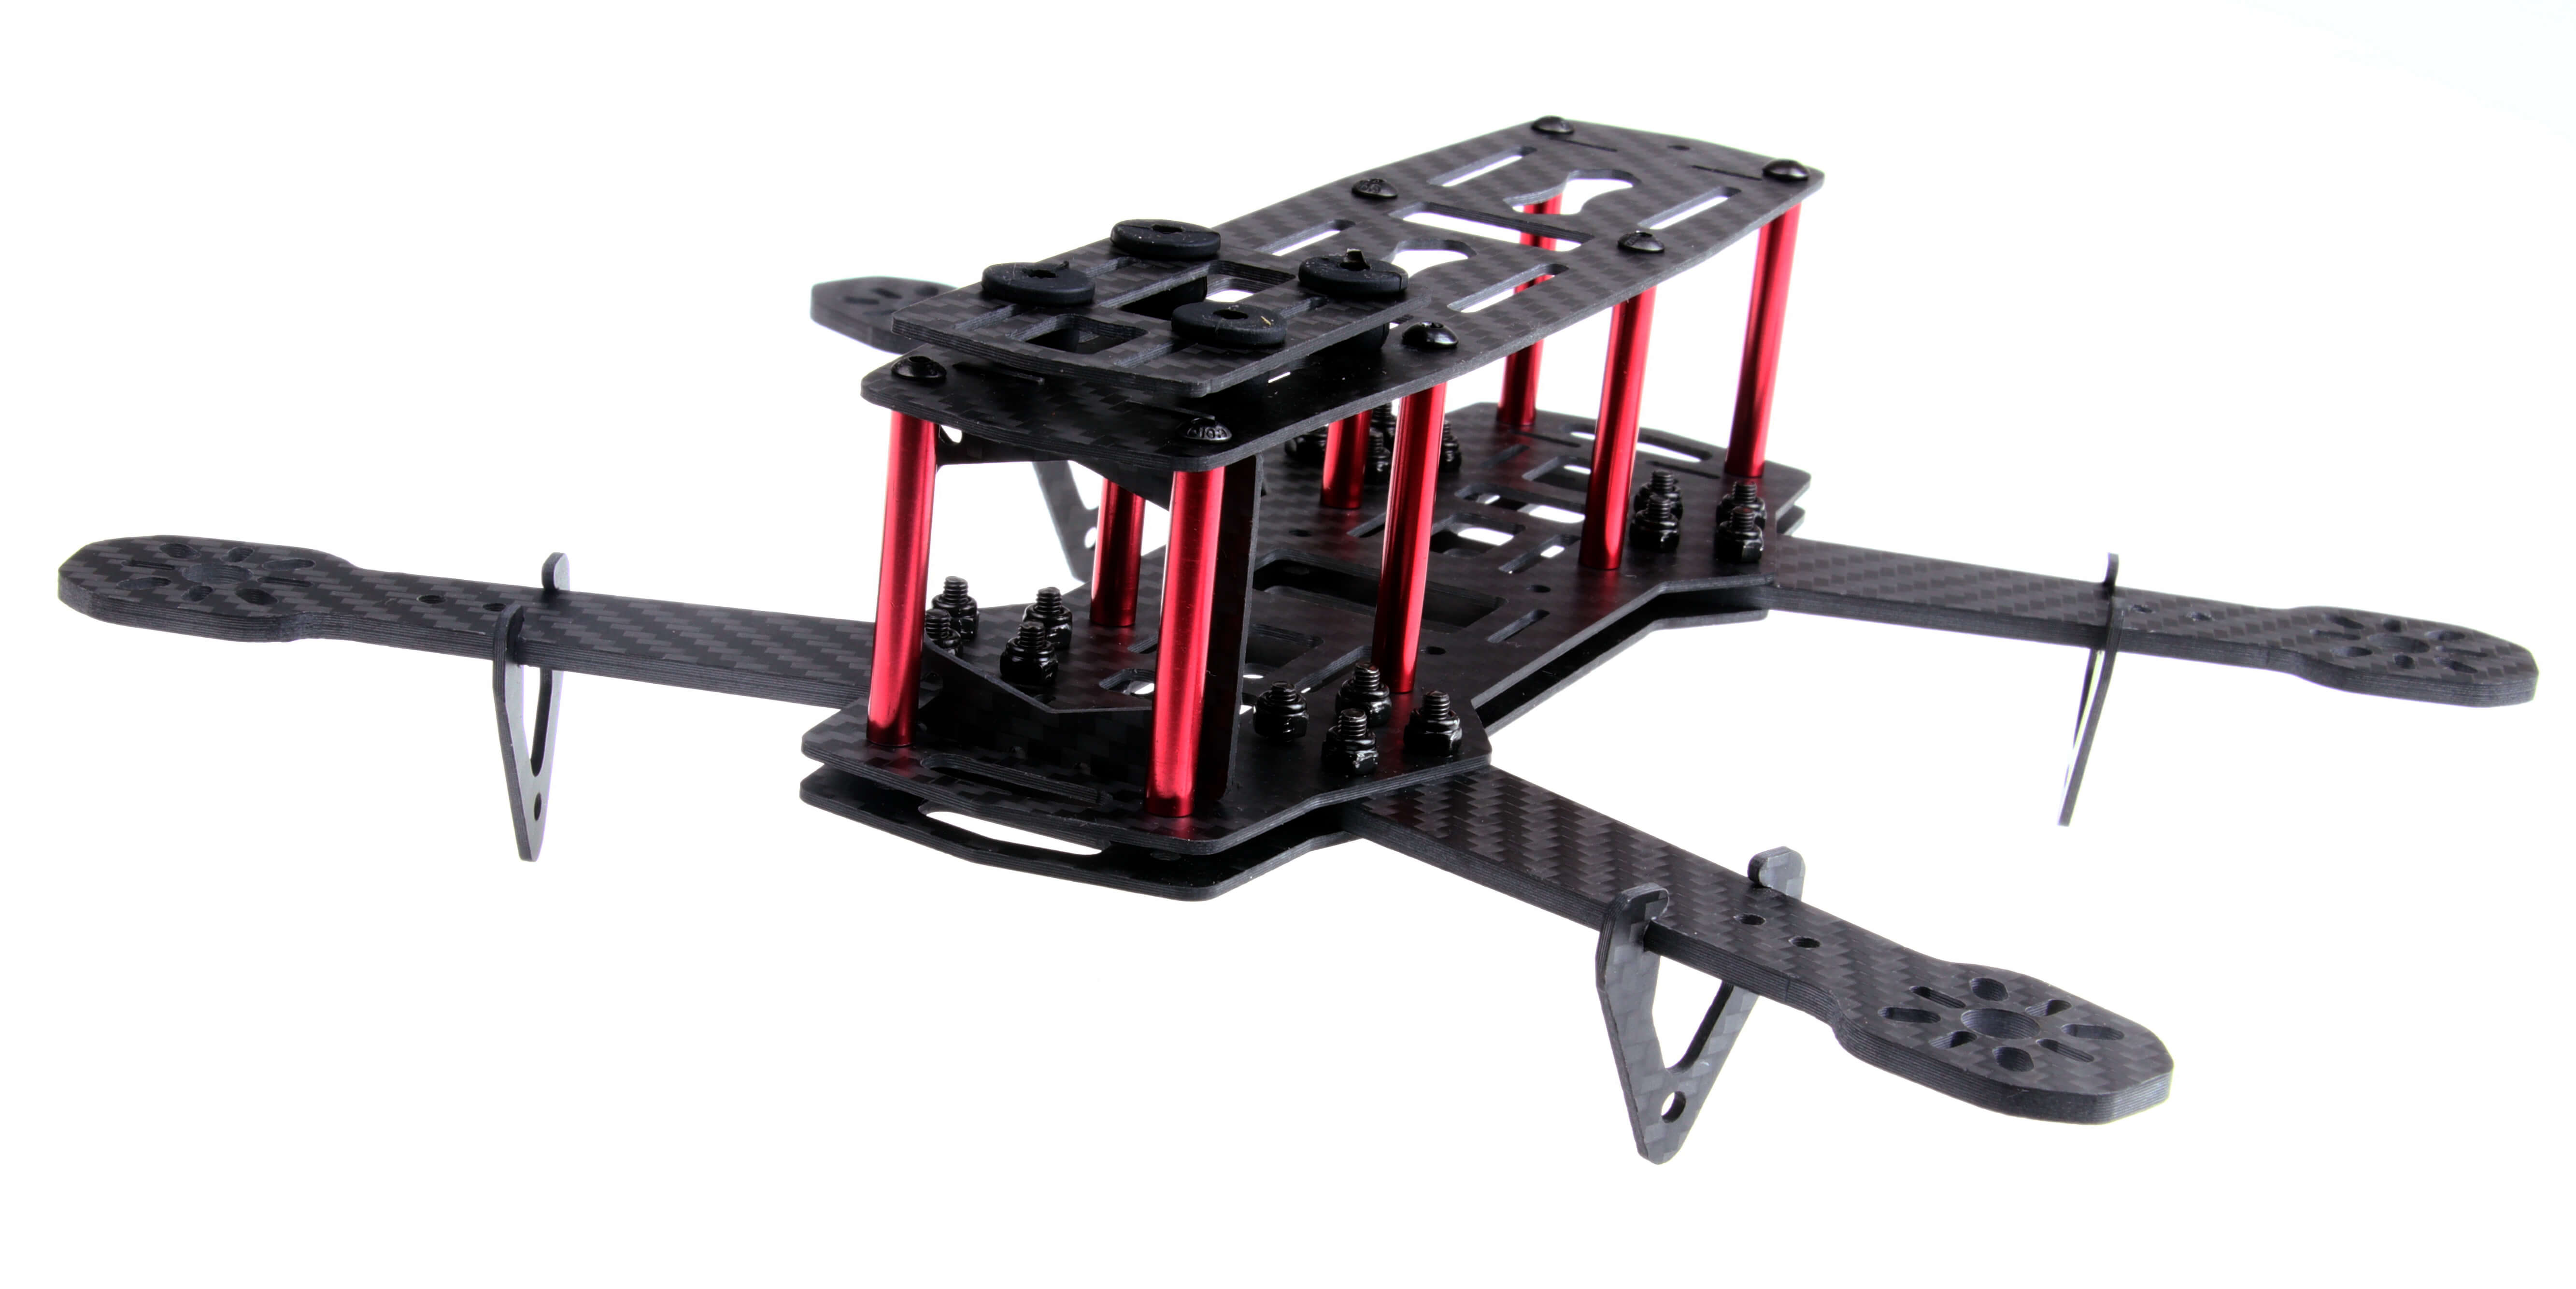 qav250-karbonfiber-racing-quadcopter-mini-drone-govdesi-4.jpg (329 KB)